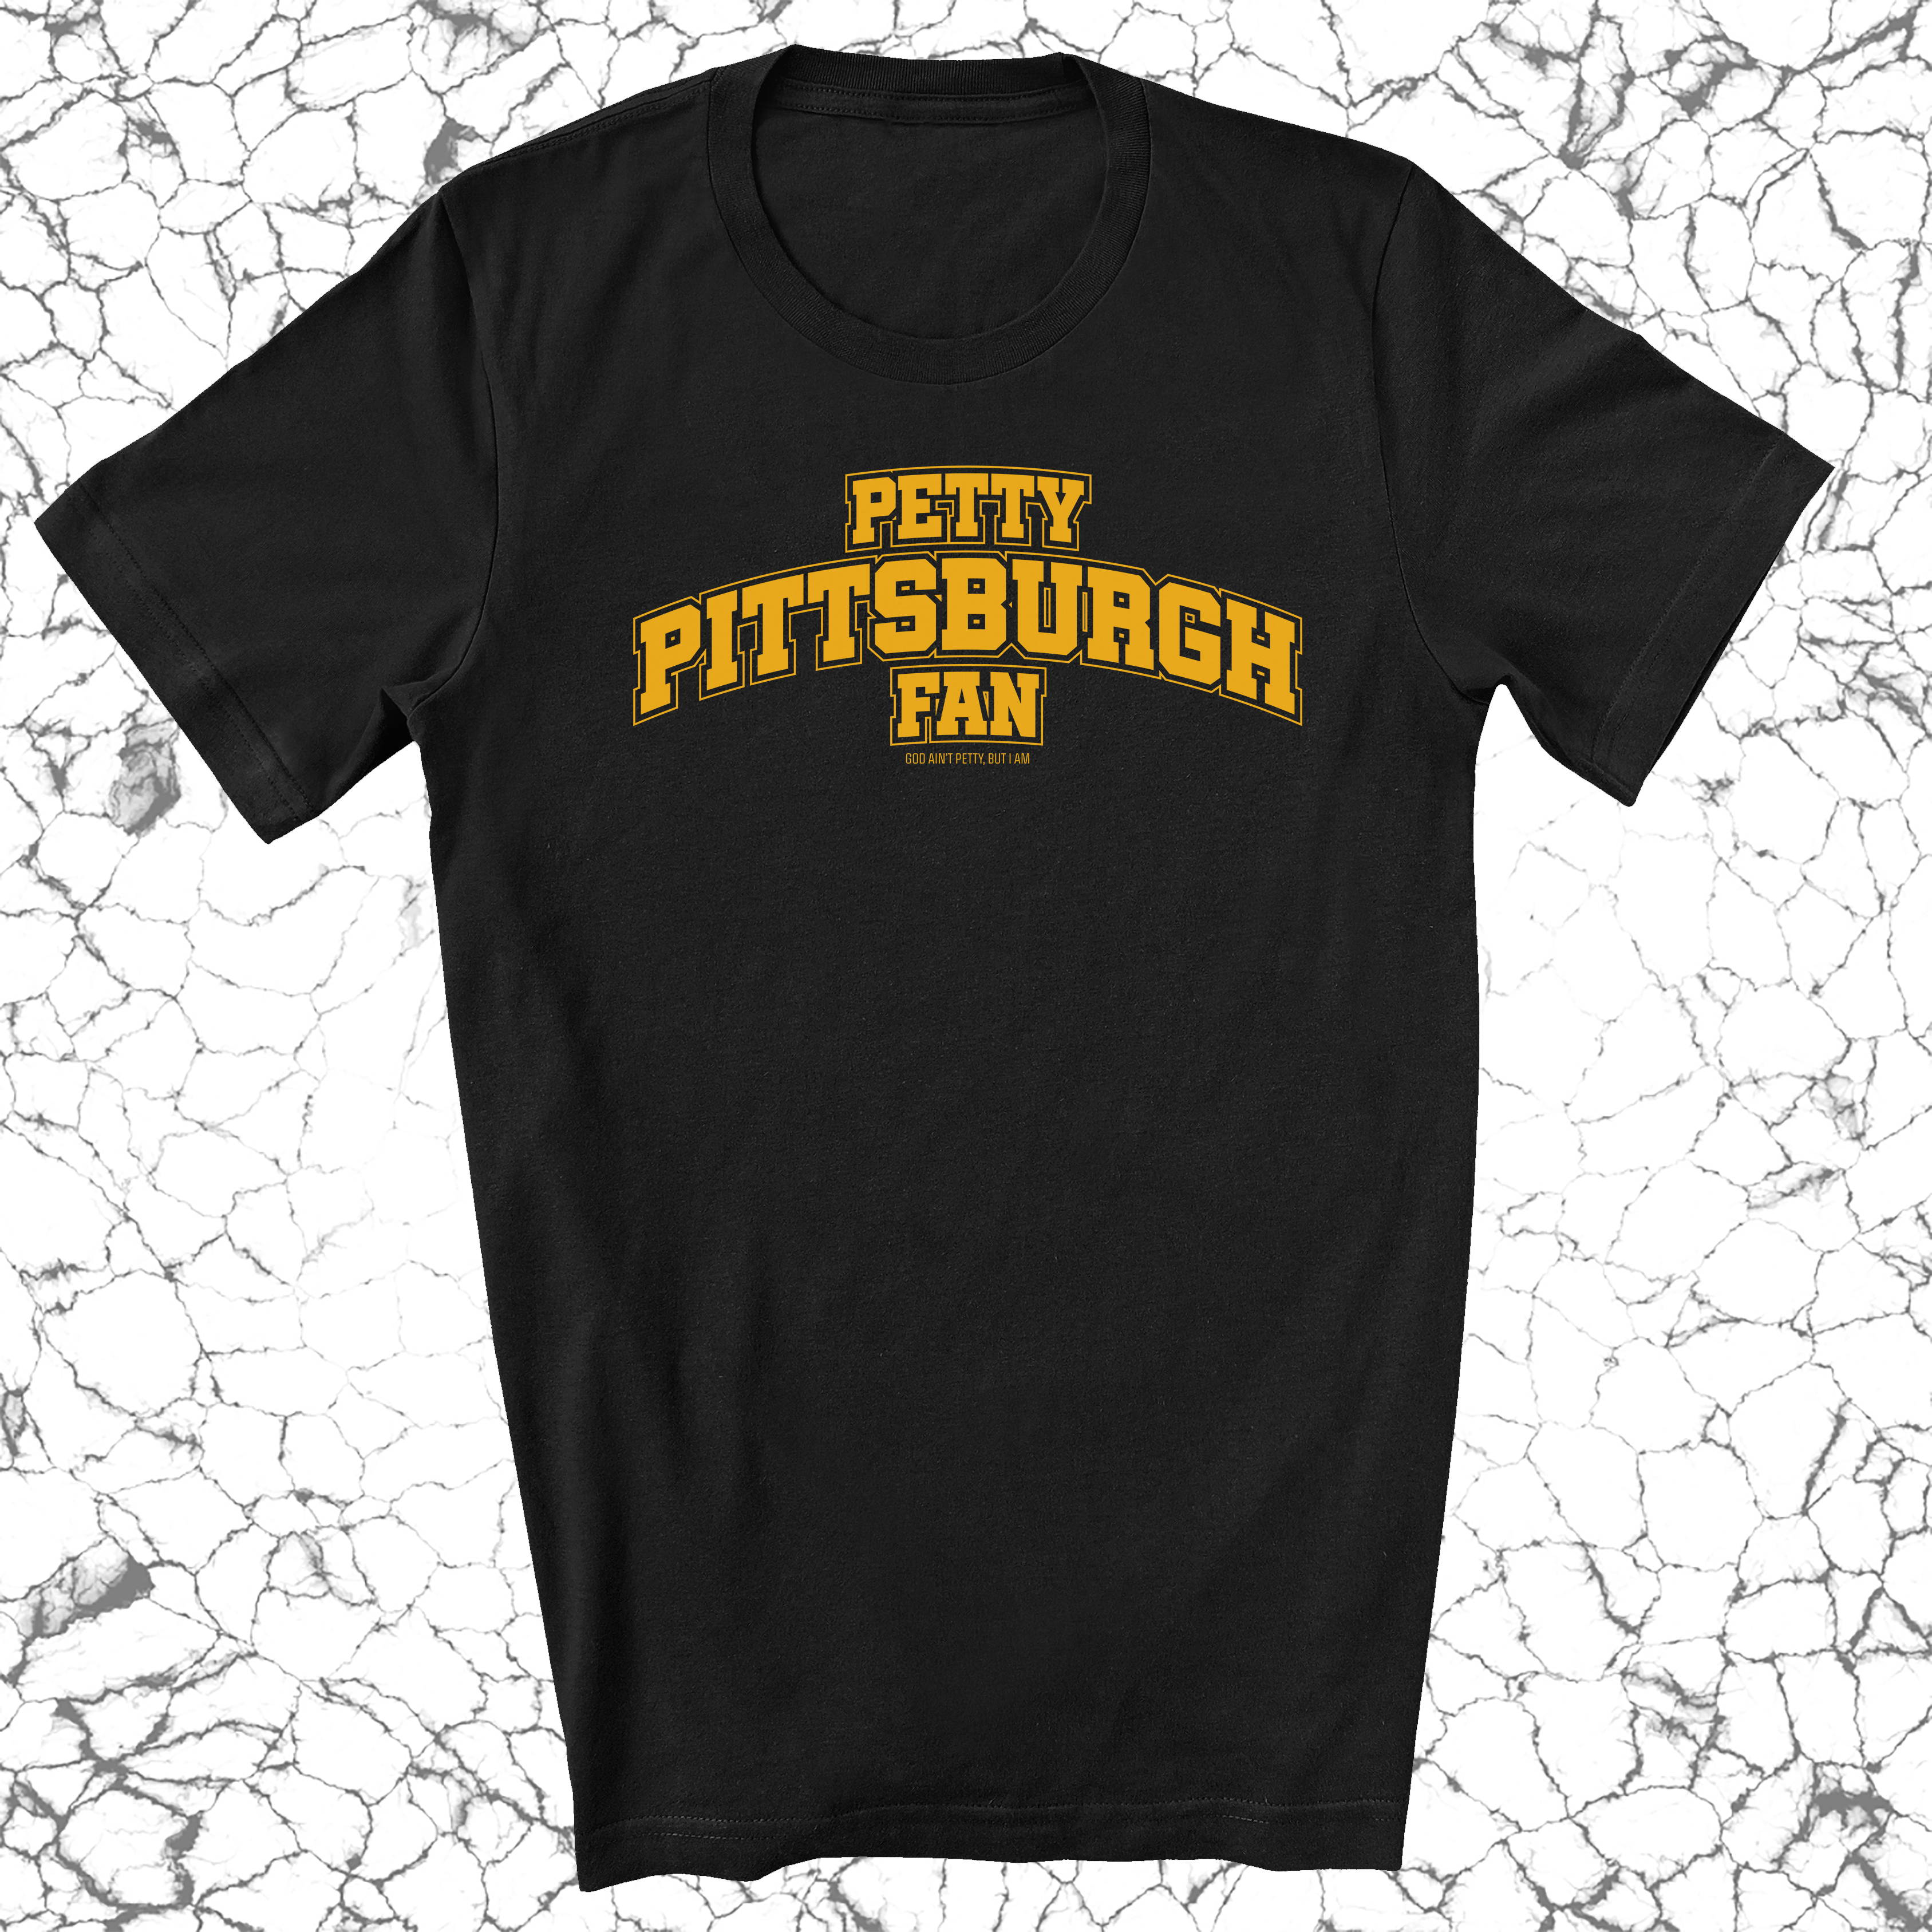 Petty Pittsburgh Fan Unisex Tee (Black/Gold)-T-Shirt-The Original God Ain't Petty But I Am